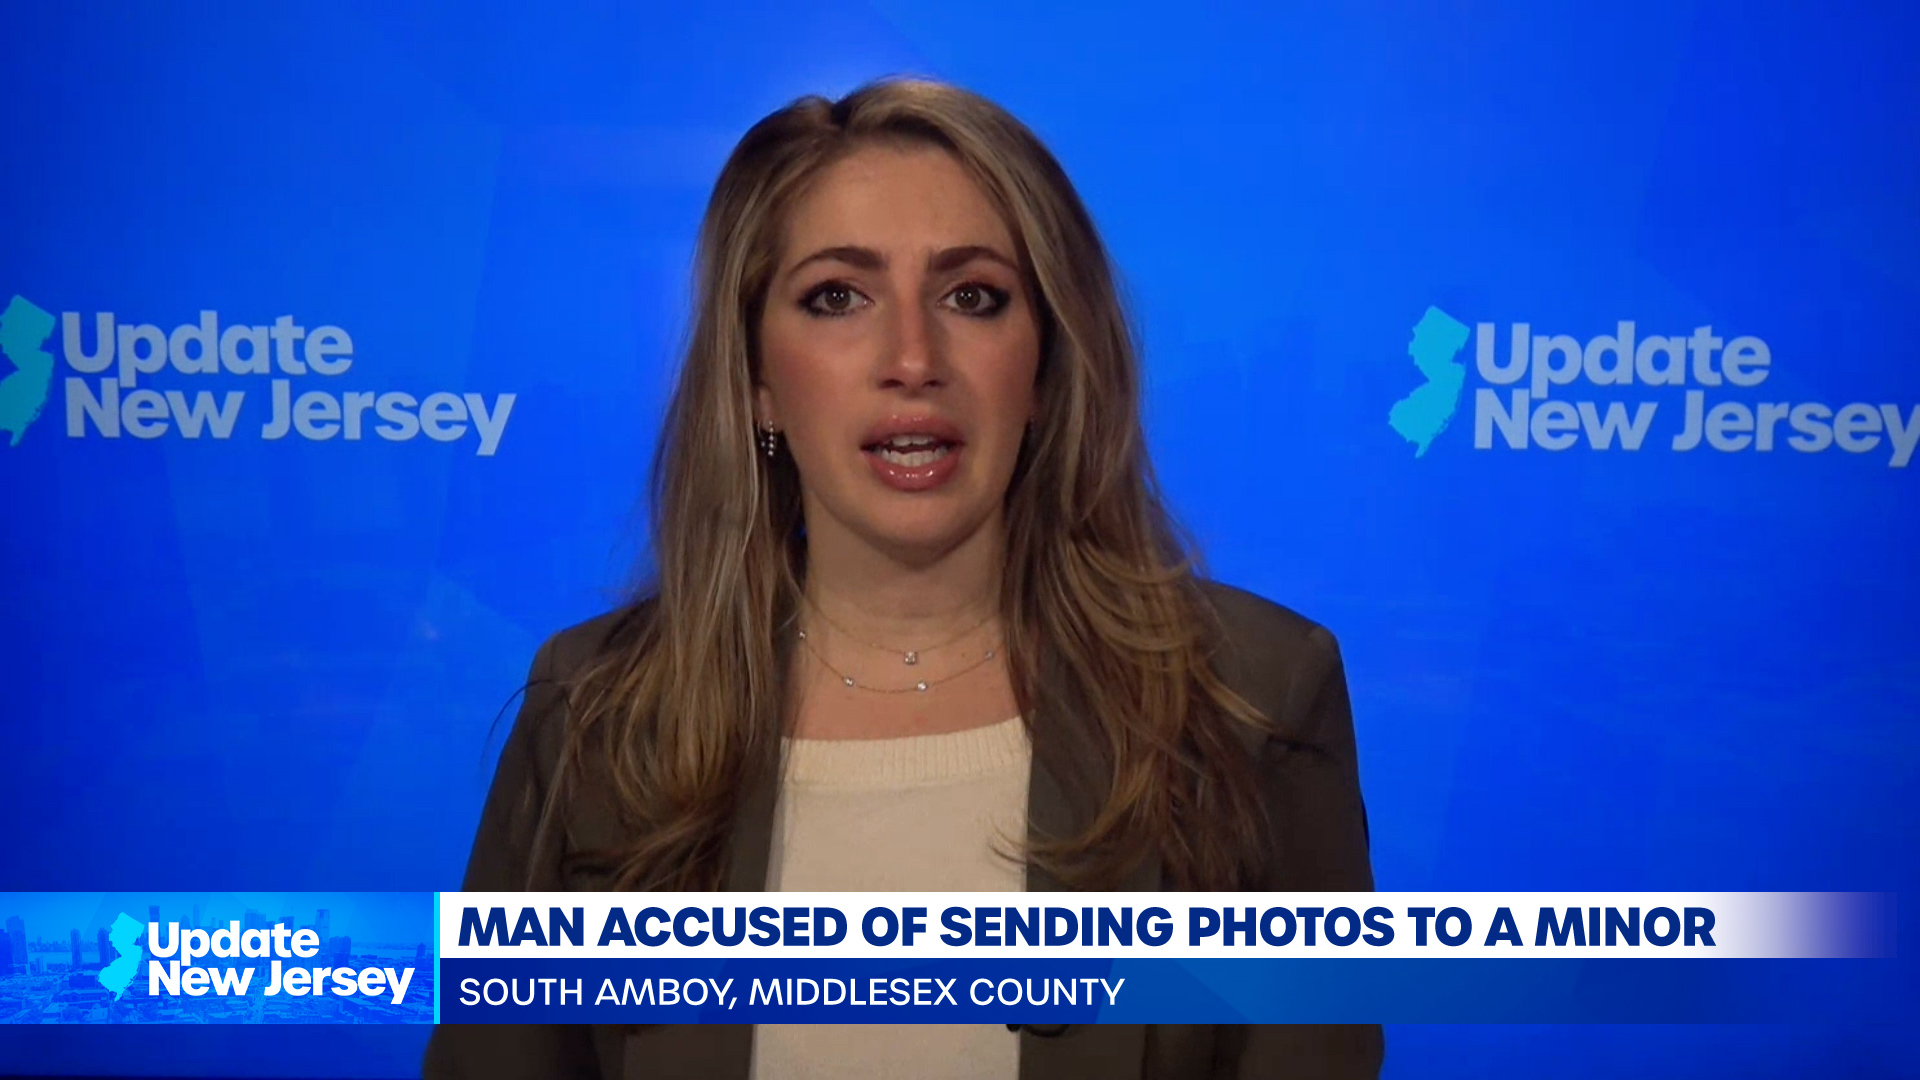 News Update: Man Accused of Sending Photos to Minor